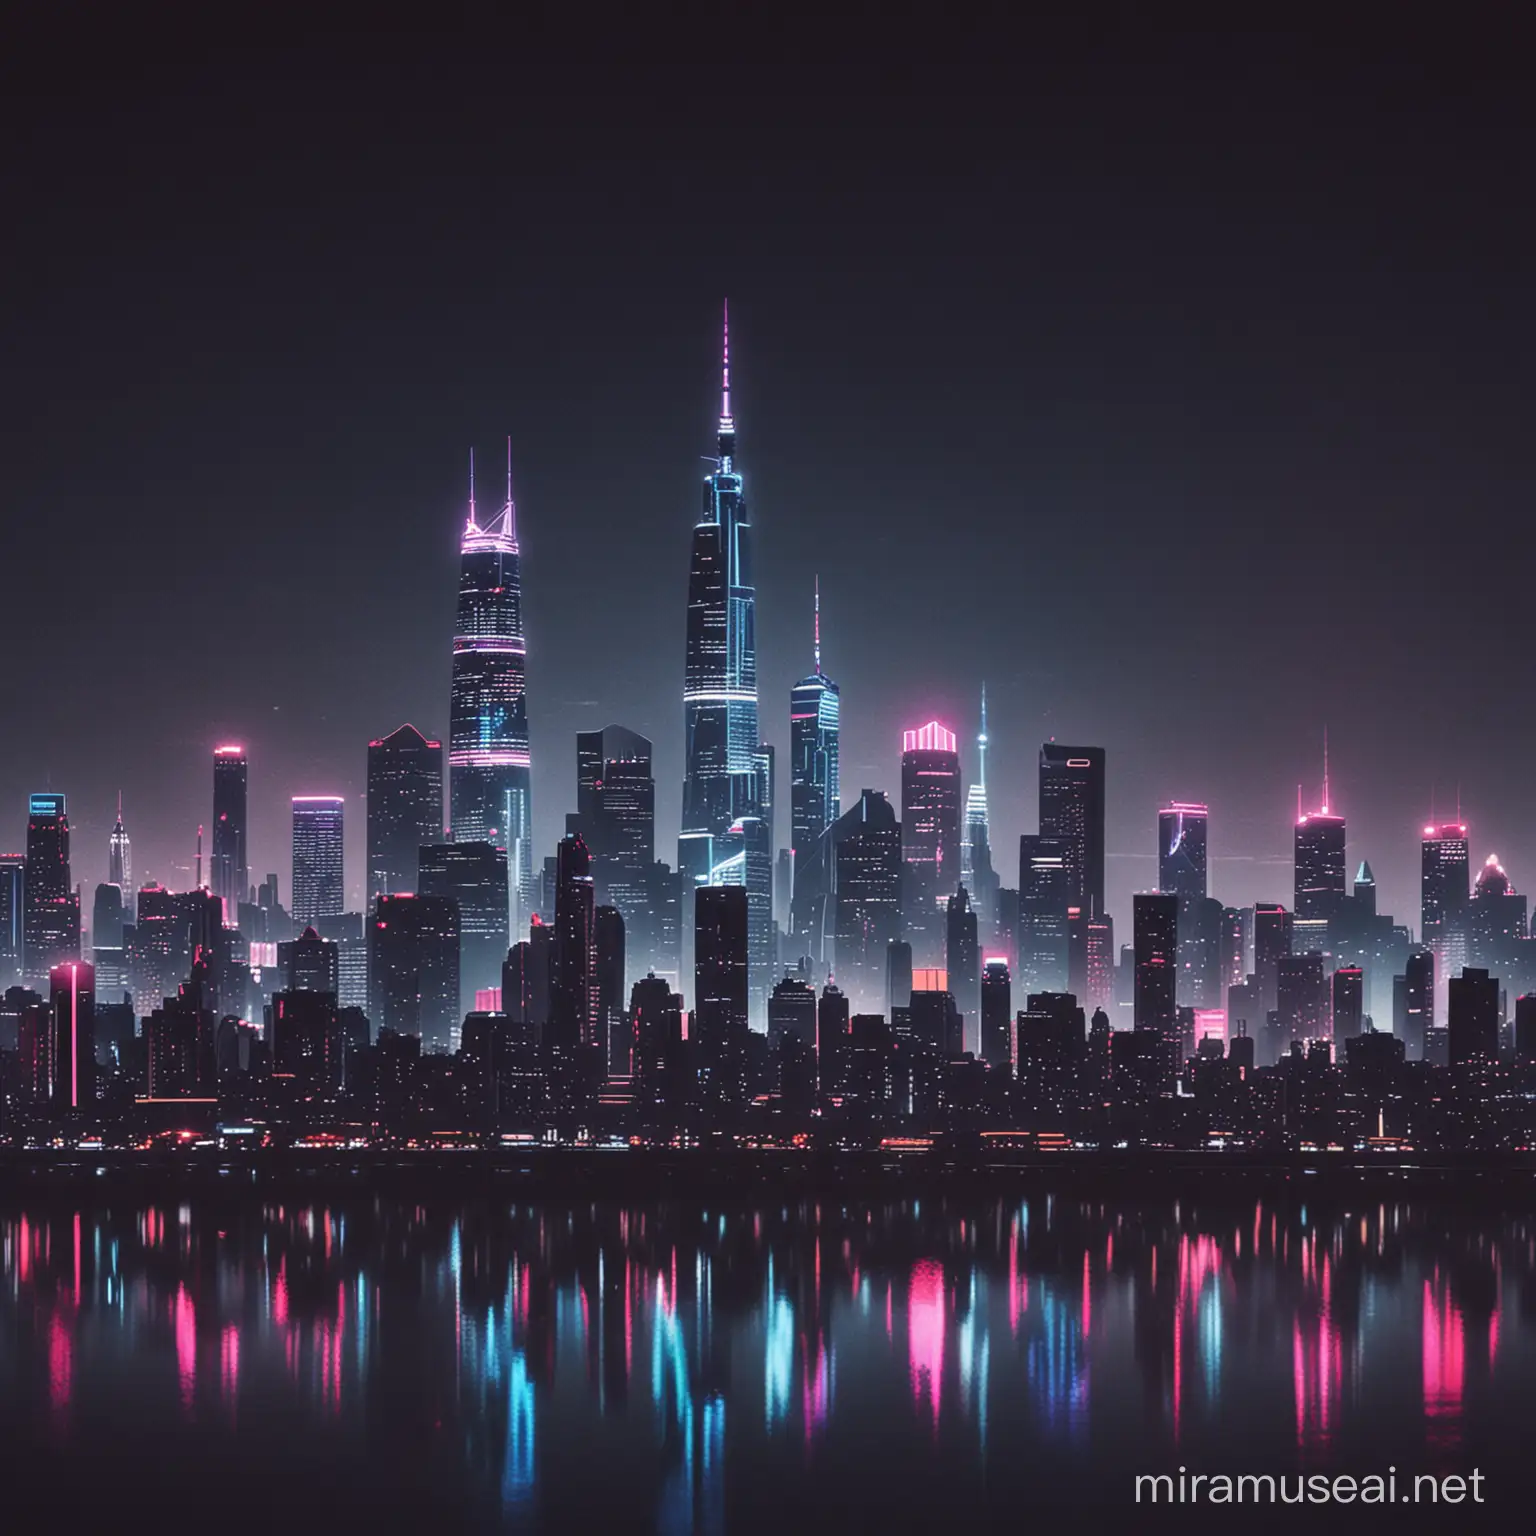 Urban Night Skyline Illuminated by Dynamic Neon Lights